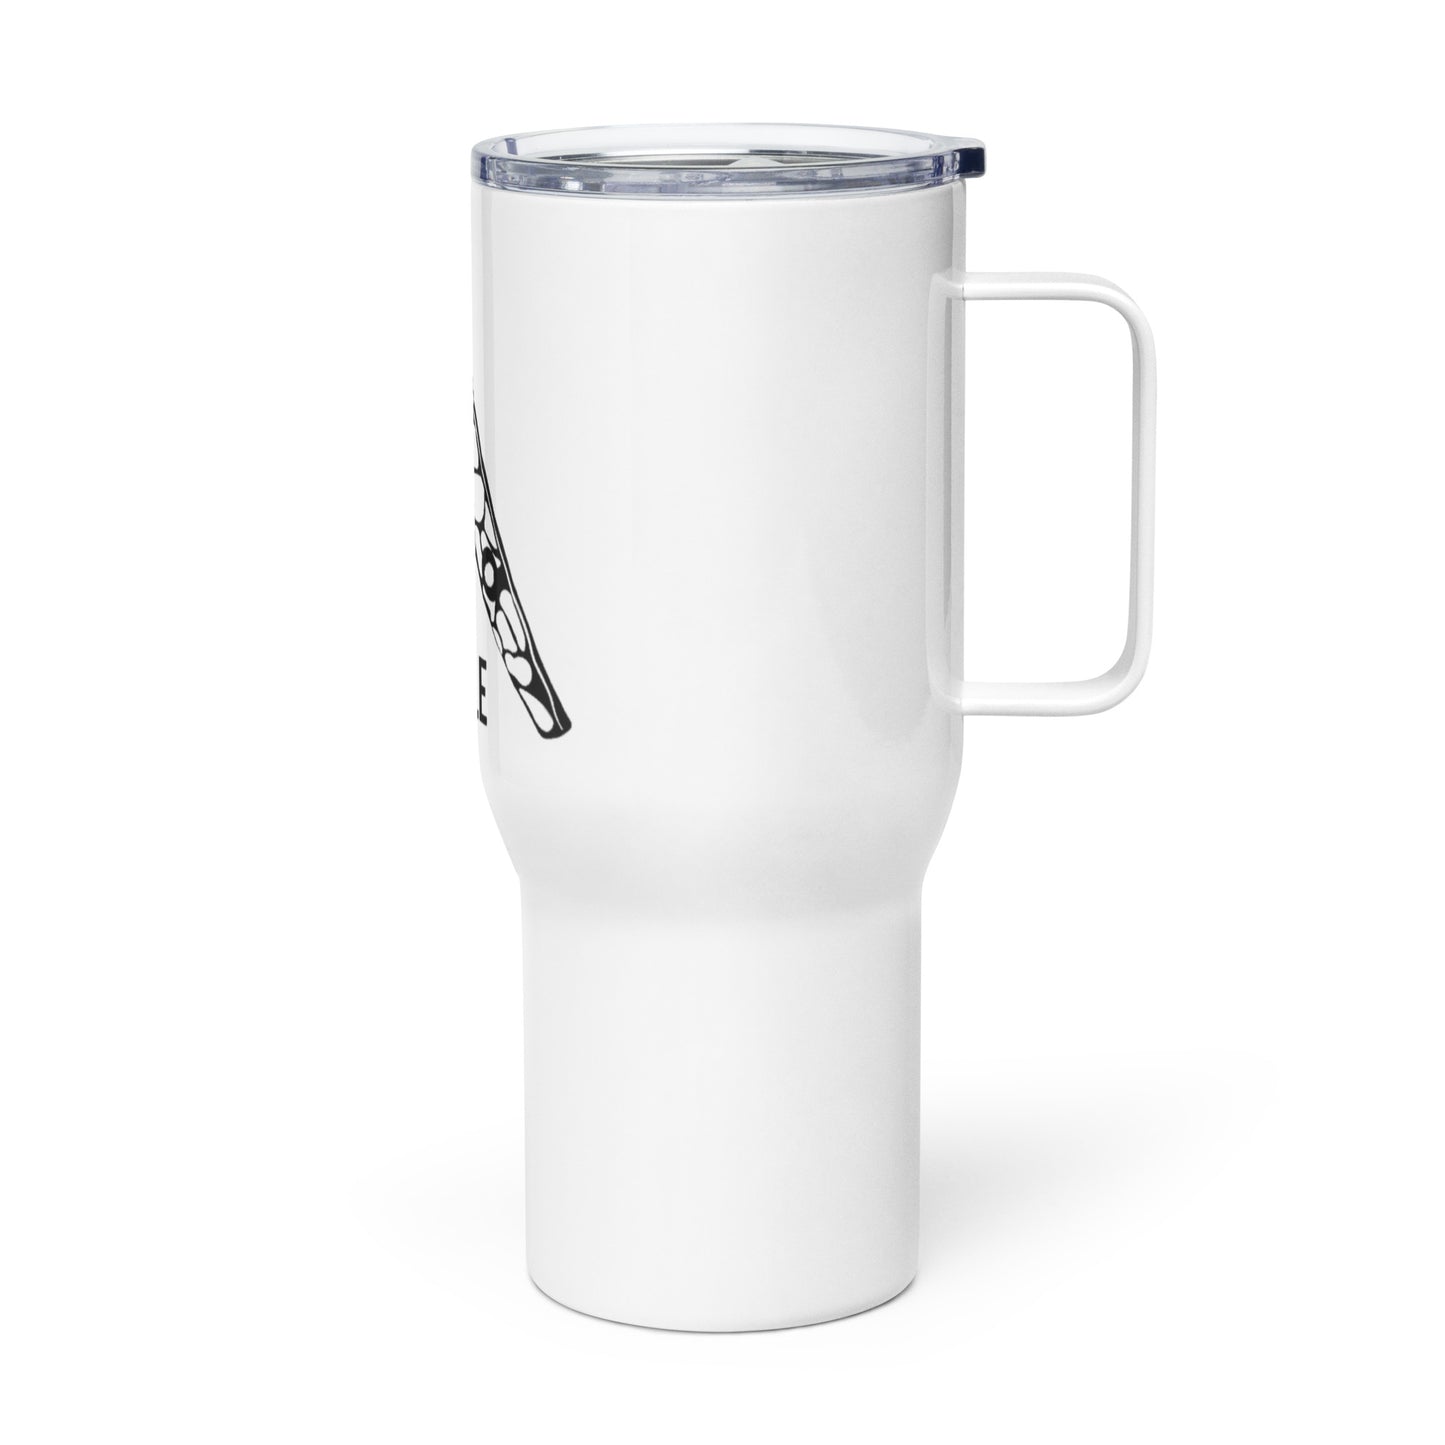 Snurrebassen's Travel Mug with handle